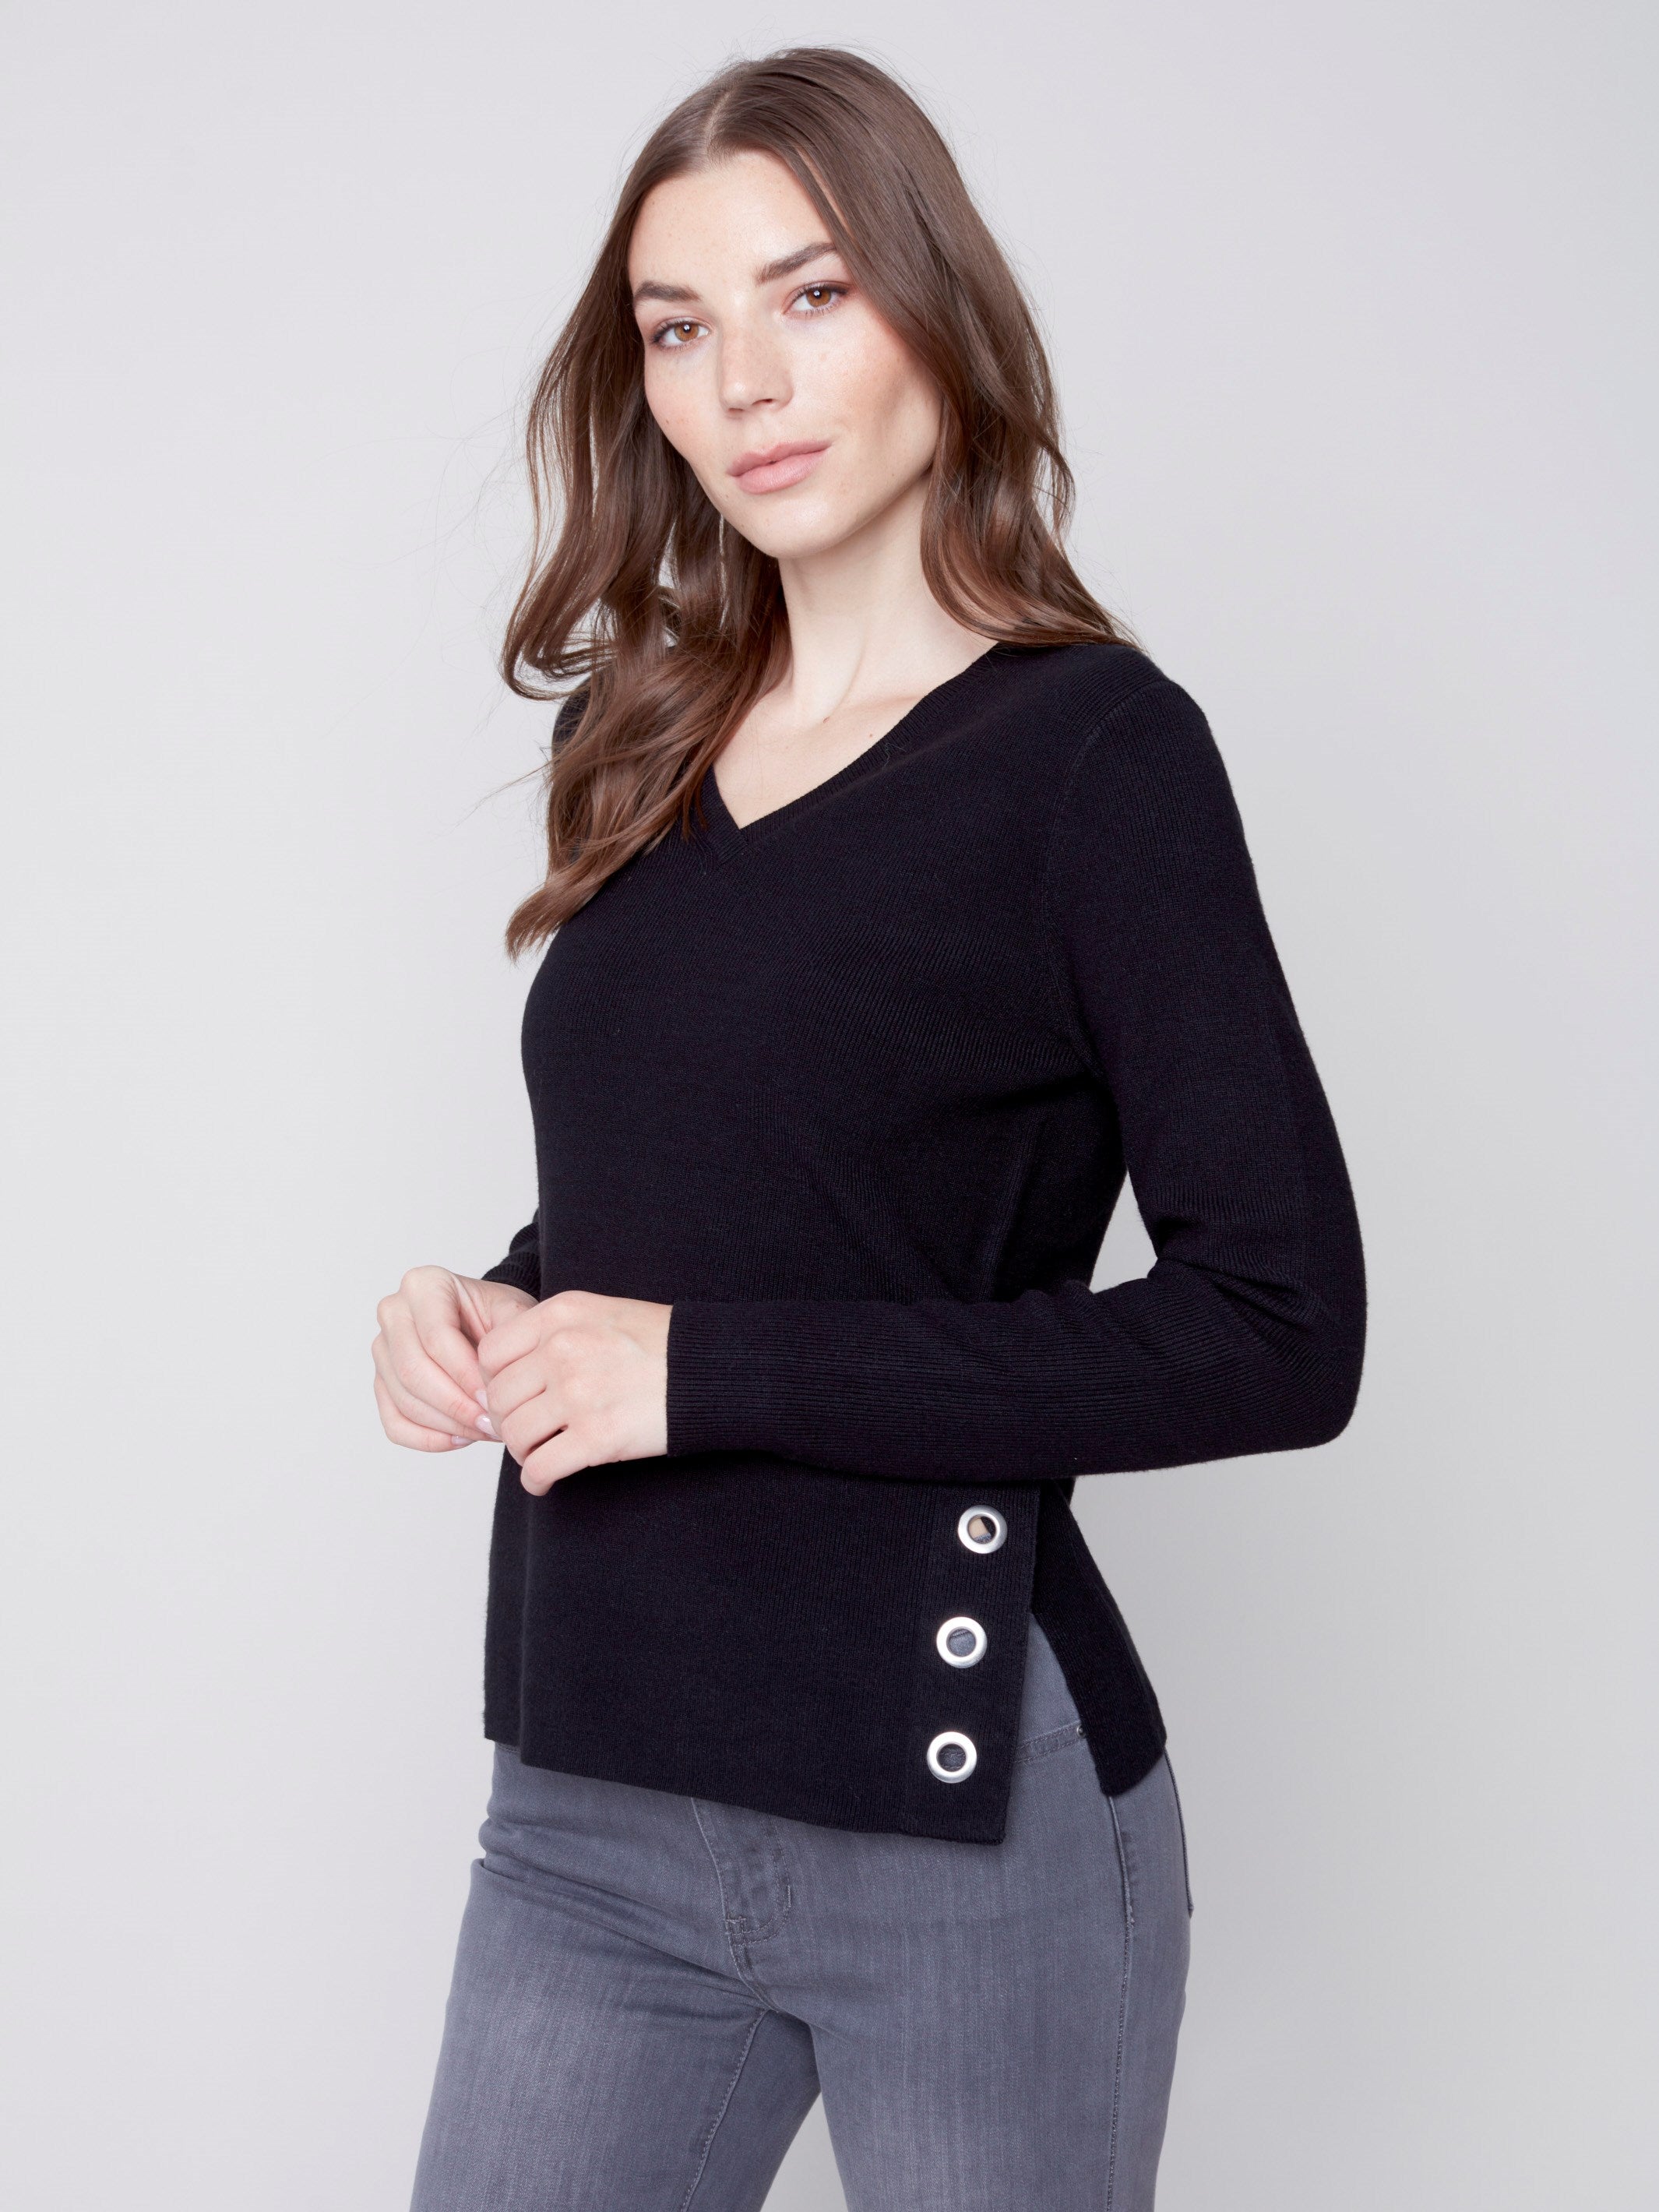 V-Neck Sweater with Grommet Detail - Black